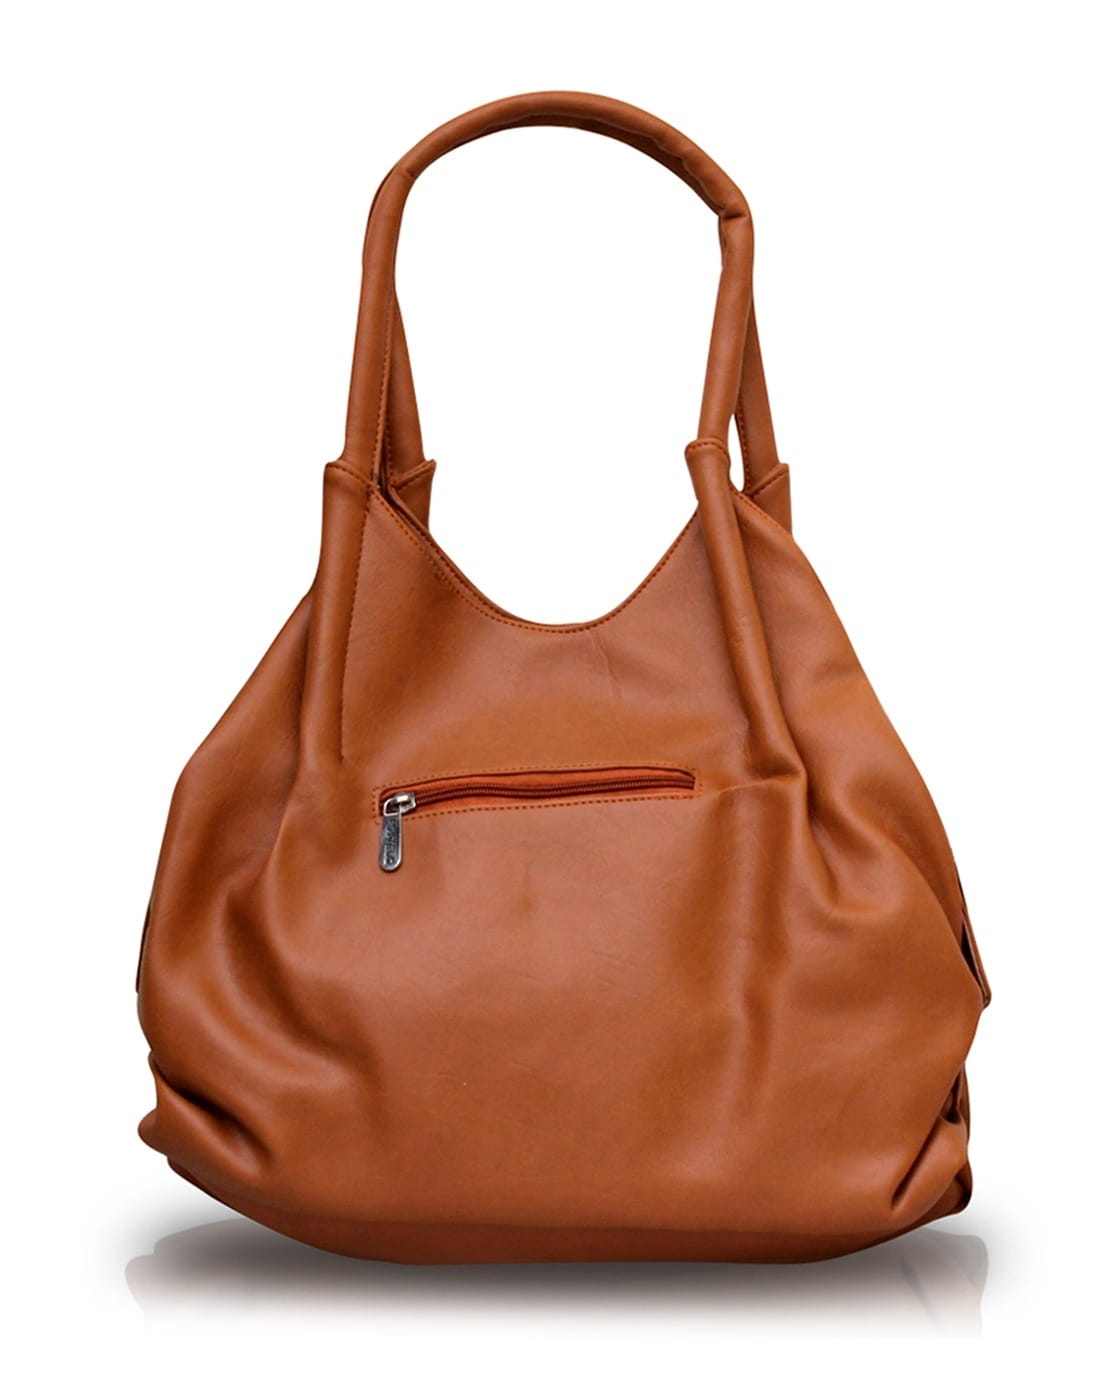 Handbag For Women And Girls  Ladies Purse Woman Gifts Shoulder Bags Side  Handbags Wedding Designer